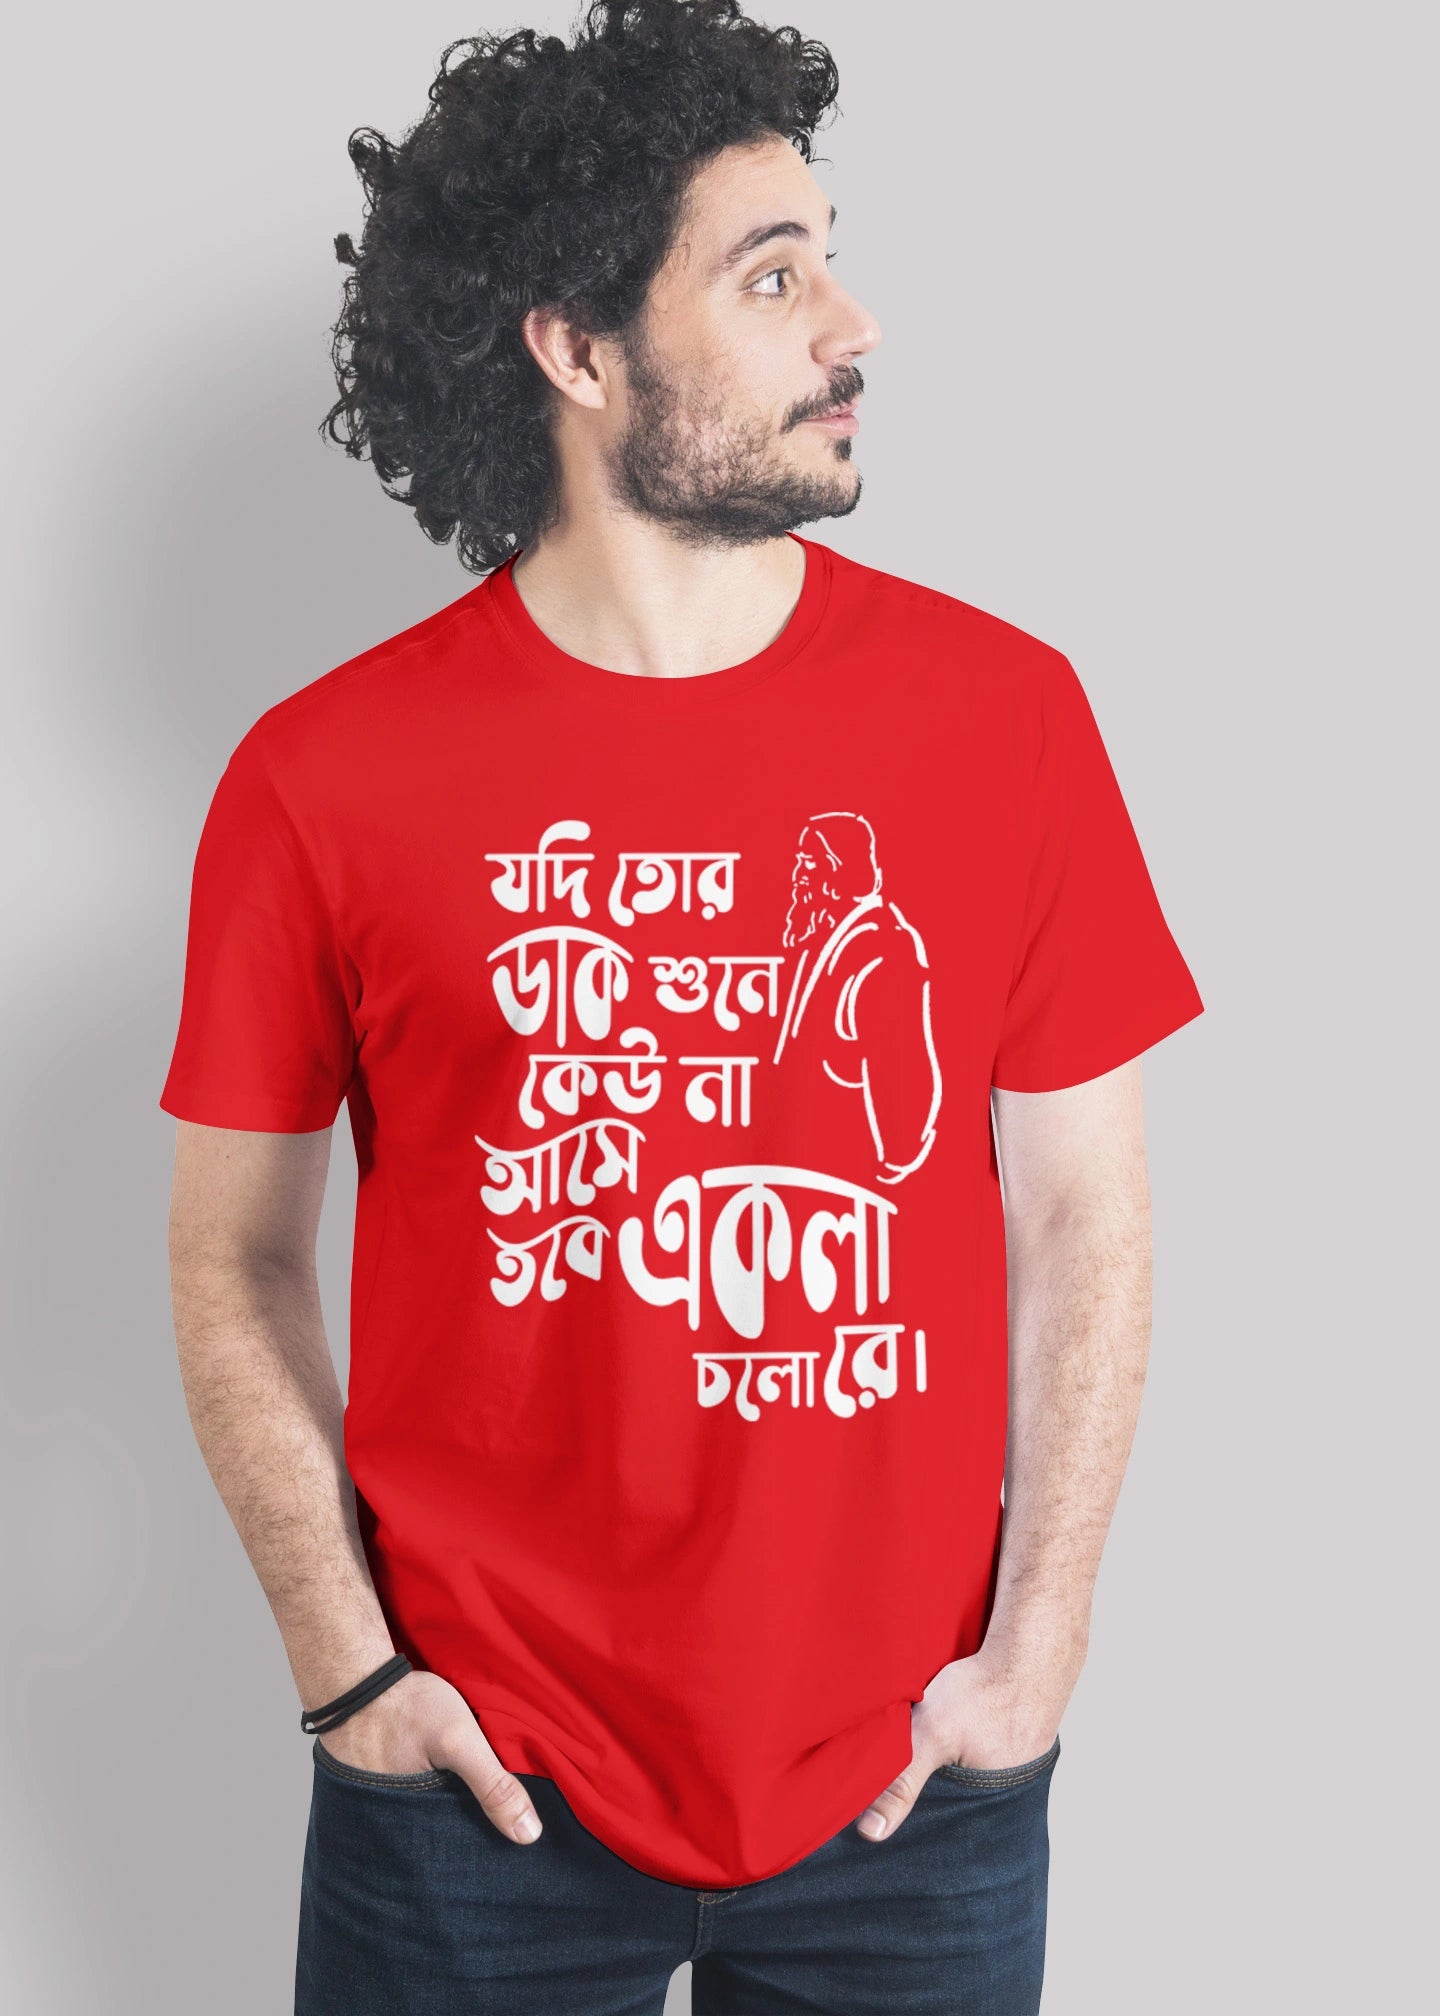 Jodi tor dak shune keu bengali Printed Half Sleeve Premium Cotton T-shirt